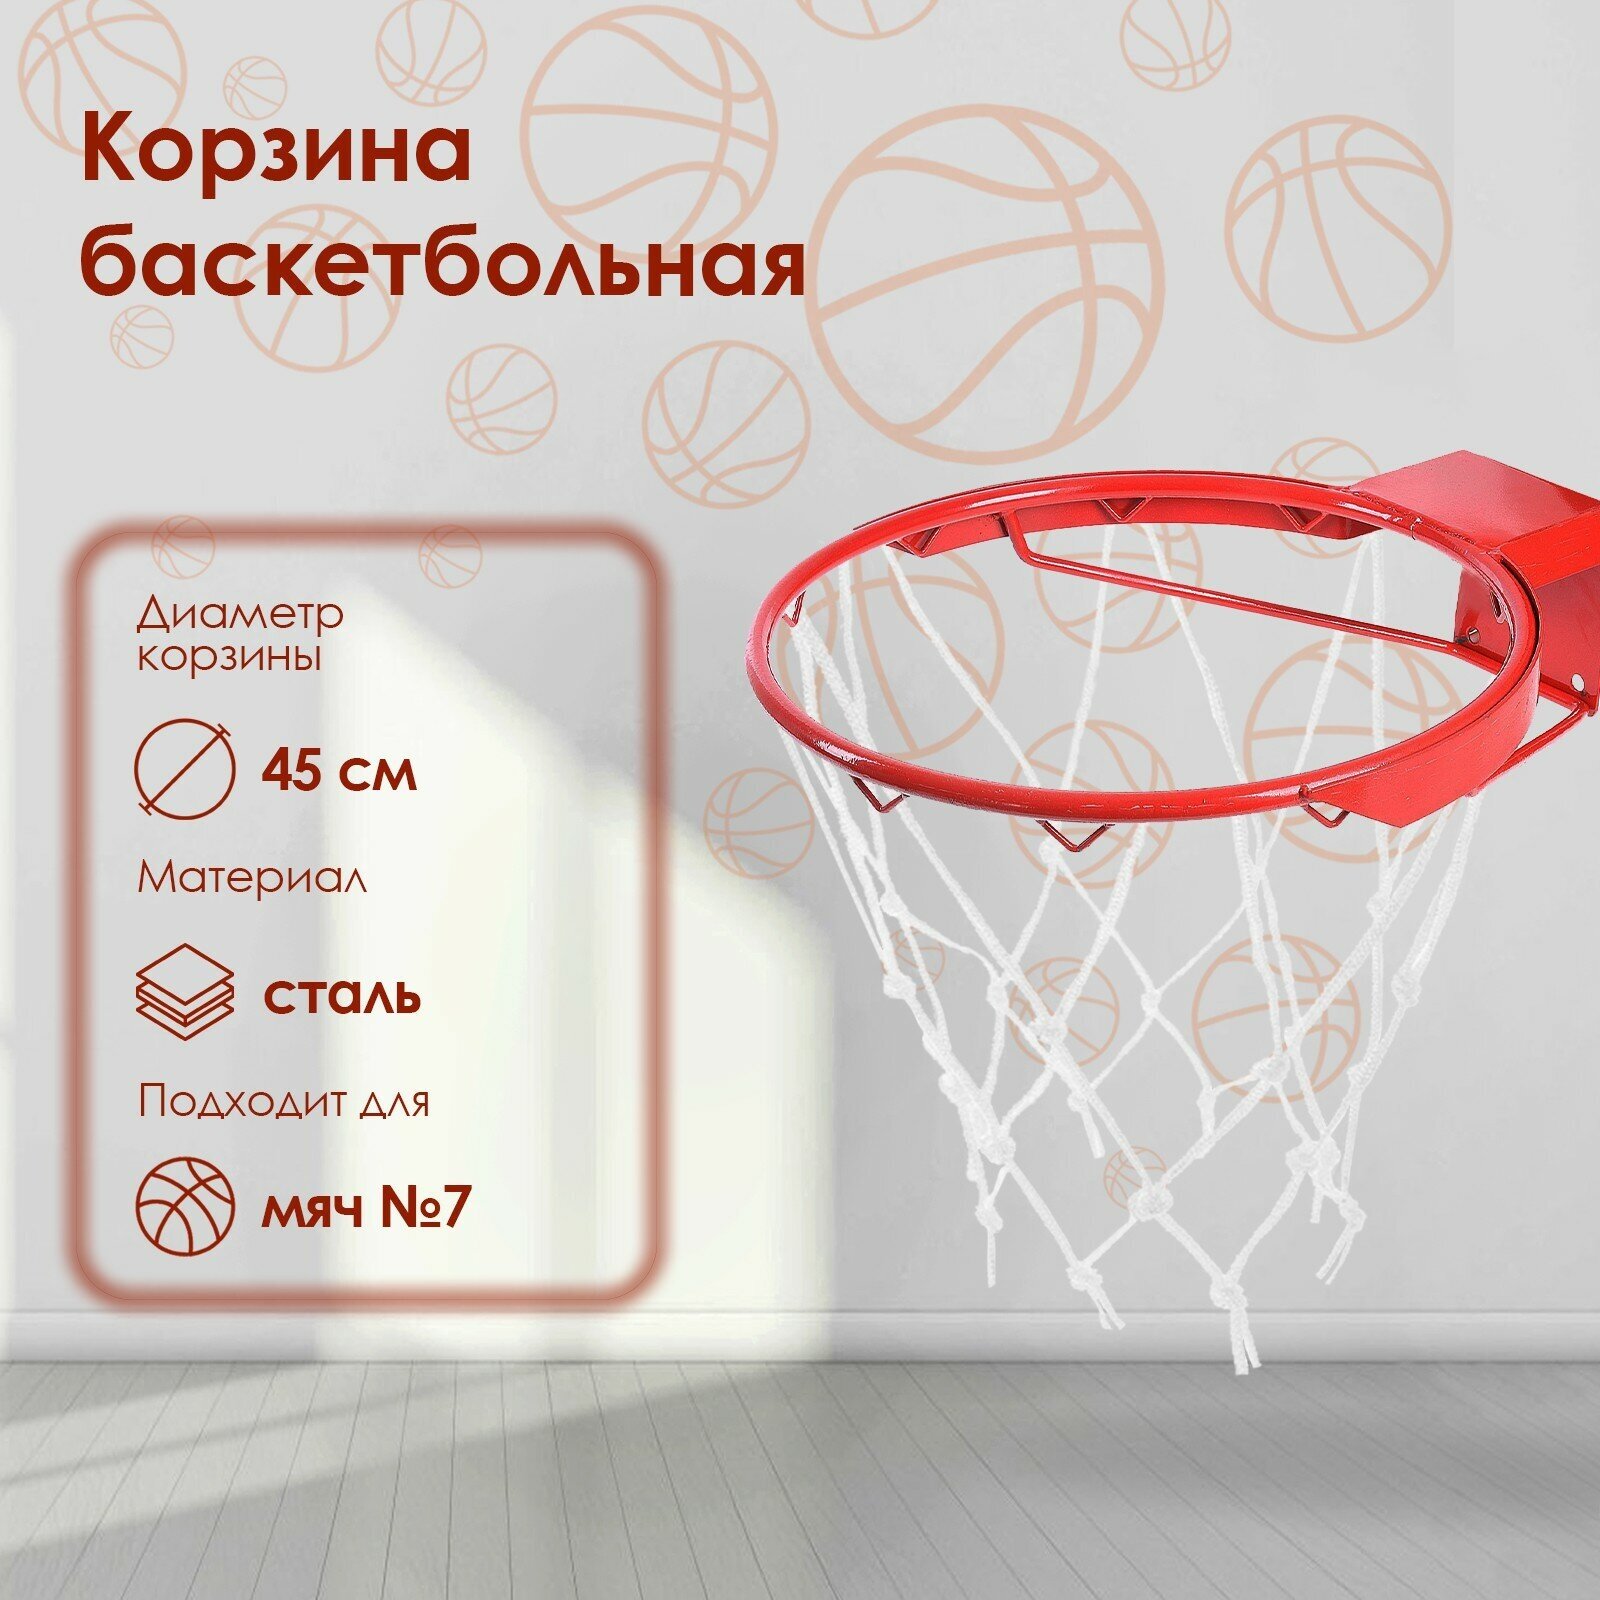 Корзина баскетбольная №7 диаметр 450 мм антивандальная